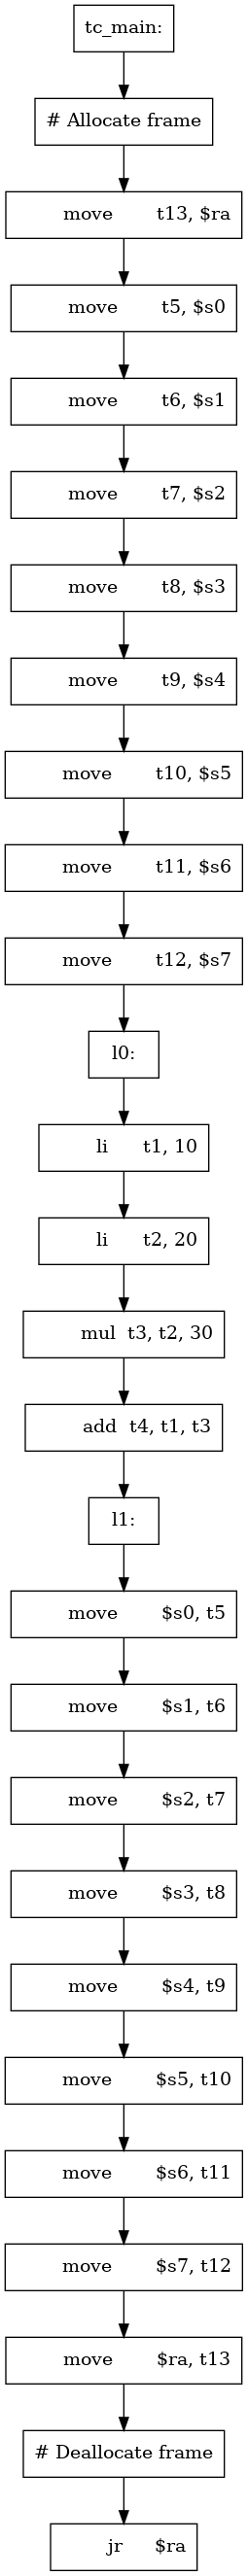 /* Graph Visualization */
digraph "tens.main._main.flow.gv" {
  node [shape=box];
  "0" [label="tc_main:"]
  "1" [label="# Allocate frame"]
  "2" [label="	move	t13, $ra"]
  "3" [label="	move	t5, $s0"]
  "4" [label="	move	t6, $s1"]
  "5" [label="	move	t7, $s2"]
  "6" [label="	move	t8, $s3"]
  "7" [label="	move	t9, $s4"]
  "8" [label="	move	t10, $s5"]
  "9" [label="	move	t11, $s6"]
  "10" [label="	move	t12, $s7"]
  "11" [label="l0:"]
  "12" [label="	li	t1, 10"]
  "13" [label="	li	t2, 20"]
  "14" [label="	mul	t3, t2, 30"]
  "15" [label="	add	t4, t1, t3"]
  "16" [label="l1:"]
  "17" [label="	move	$s0, t5"]
  "18" [label="	move	$s1, t6"]
  "19" [label="	move	$s2, t7"]
  "20" [label="	move	$s3, t8"]
  "21" [label="	move	$s4, t9"]
  "22" [label="	move	$s5, t10"]
  "23" [label="	move	$s6, t11"]
  "24" [label="	move	$s7, t12"]
  "25" [label="	move	$ra, t13"]
  "26" [label="# Deallocate frame"]
  "27" [label="	jr	$ra"]
  "0" -> "1"
  "1" -> "2"
  "2" -> "3"
  "3" -> "4"
  "4" -> "5"
  "5" -> "6"
  "6" -> "7"
  "7" -> "8"
  "8" -> "9"
  "9" -> "10"
  "10" -> "11"
  "11" -> "12"
  "12" -> "13"
  "13" -> "14"
  "14" -> "15"
  "15" -> "16"
  "16" -> "17"
  "17" -> "18"
  "18" -> "19"
  "19" -> "20"
  "20" -> "21"
  "21" -> "22"
  "22" -> "23"
  "23" -> "24"
  "24" -> "25"
  "25" -> "26"
  "26" -> "27"
}